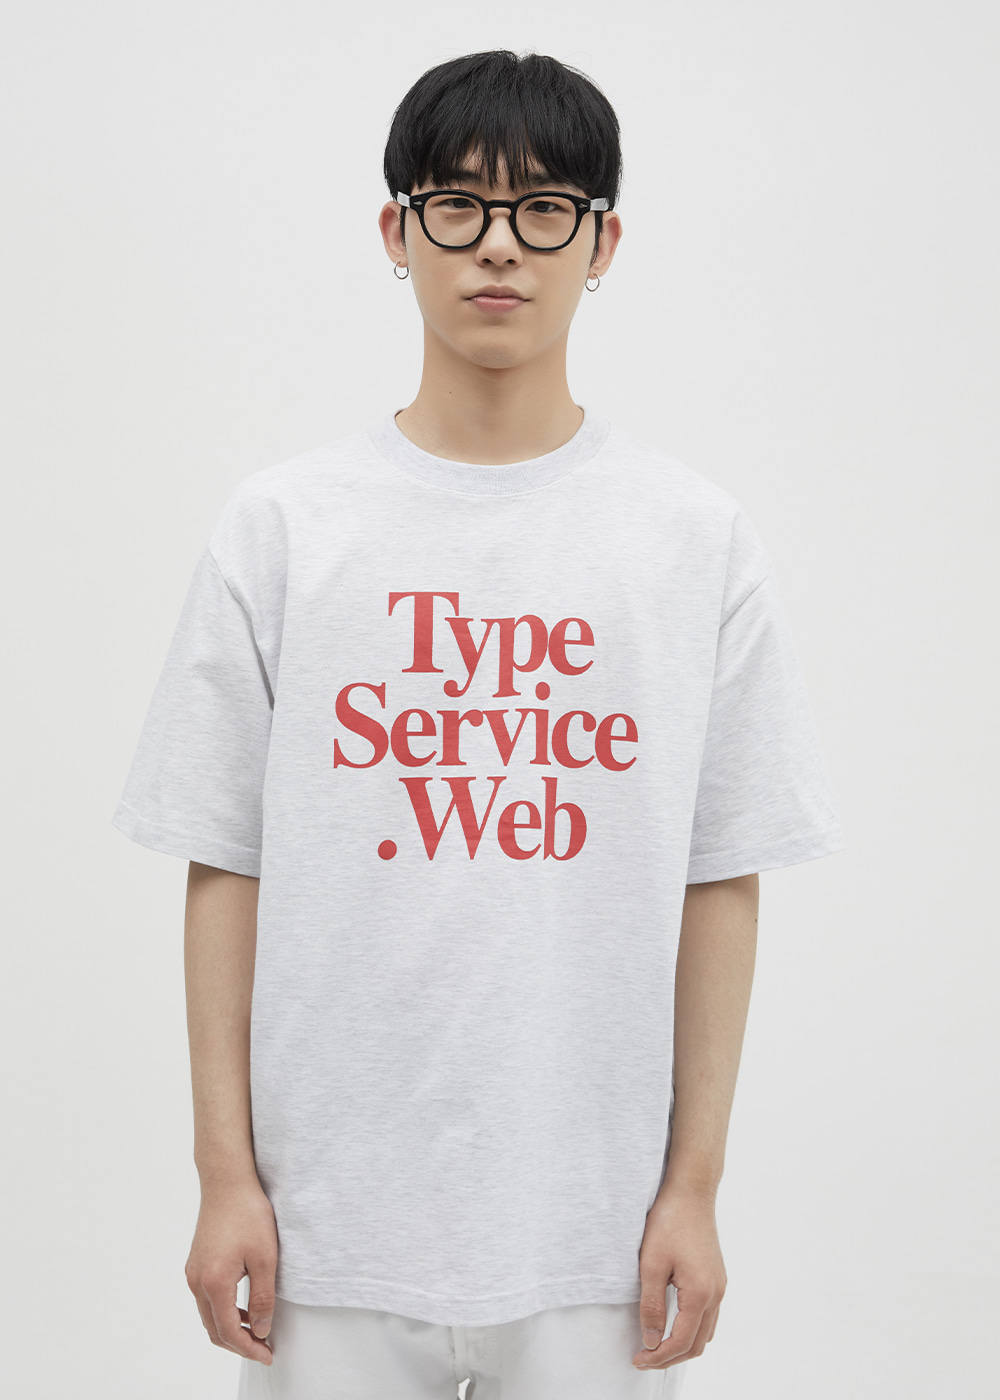 Typeservice Web T-shirt [Melange Gray]